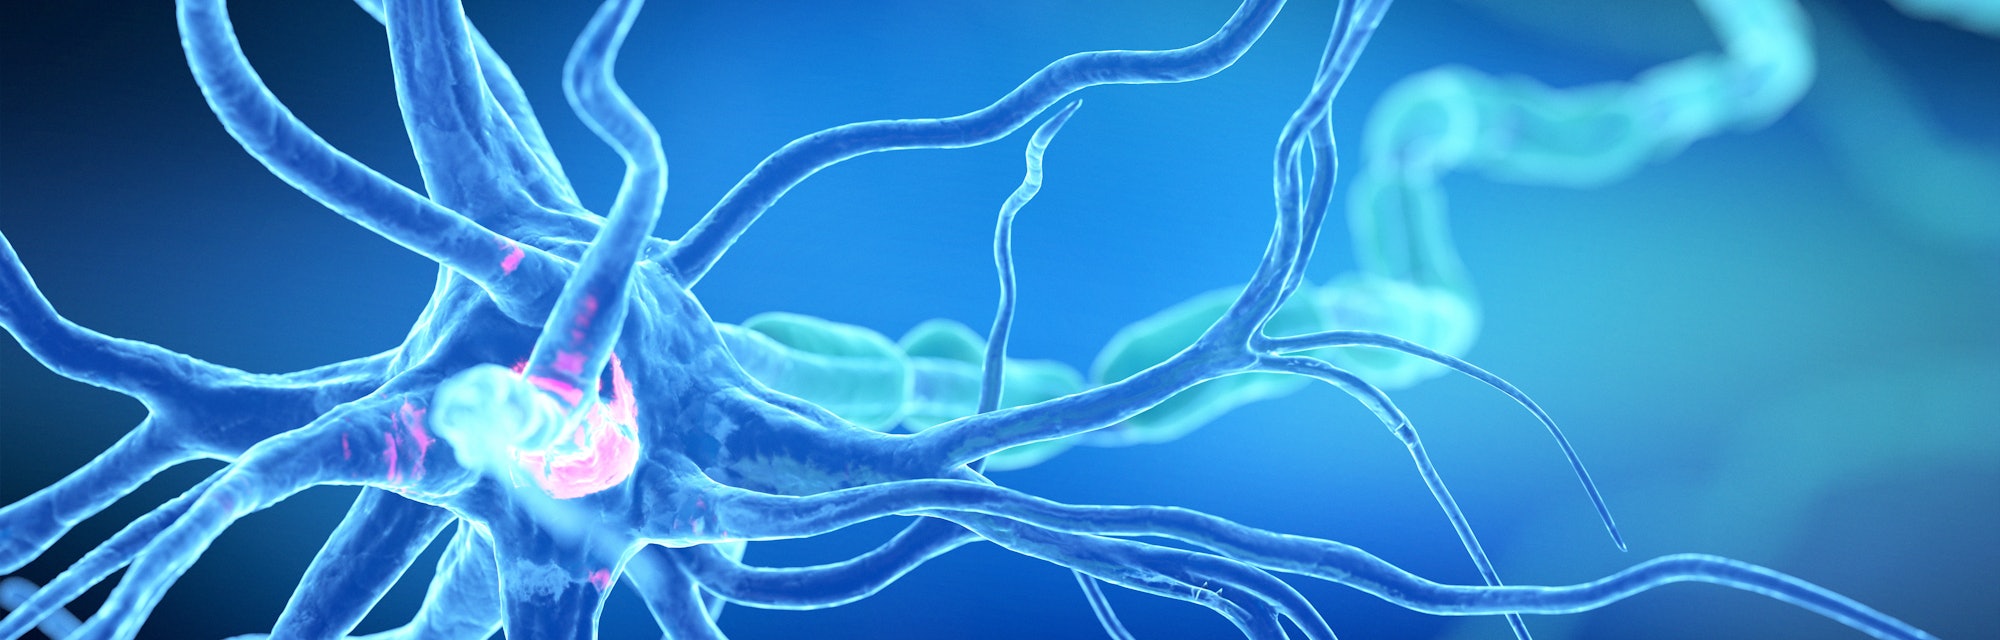 Human nerve cell, illustration.